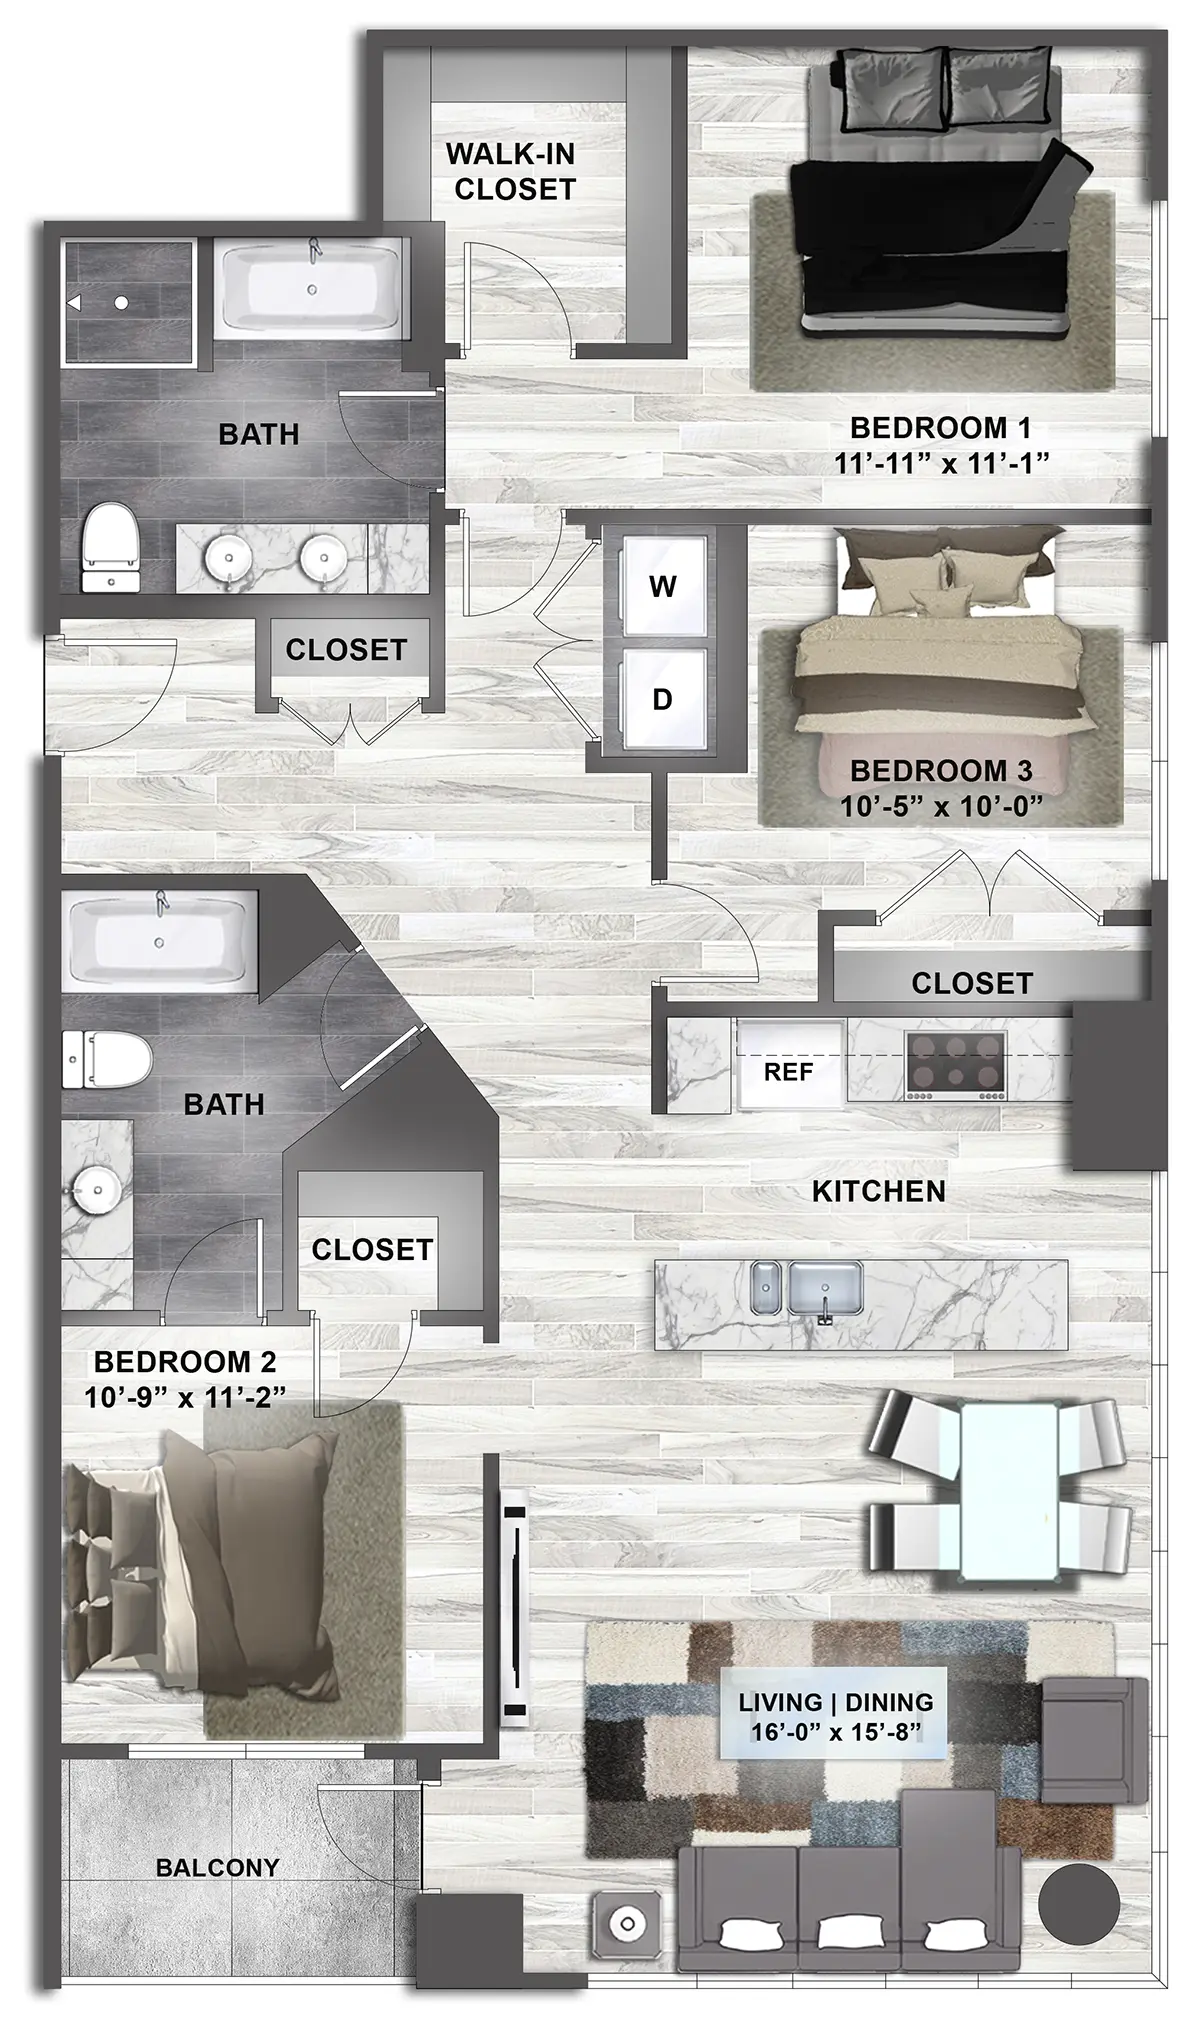 Vantage Med Center Houston Apartments FloorPlan 22